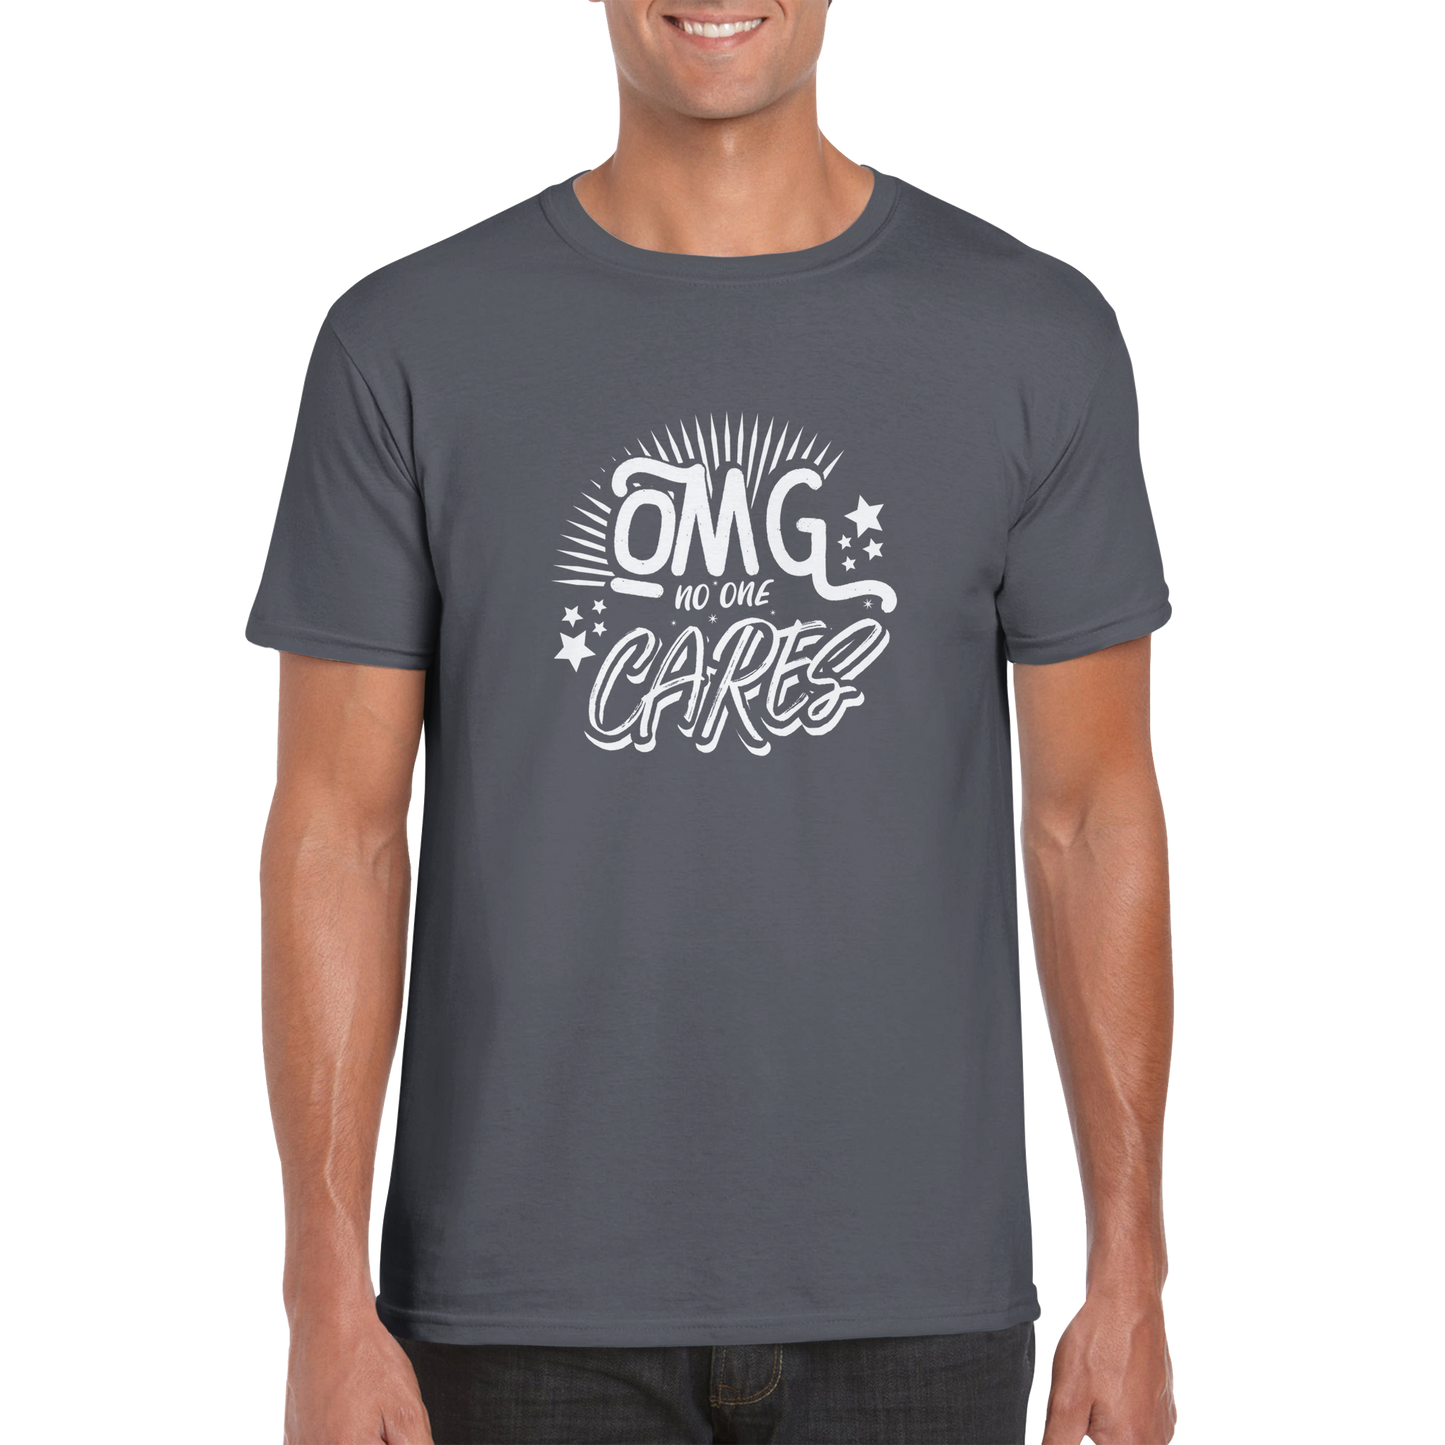 OMG Sarcasm Shirt - Classic Unisex Crewneck T-shirt